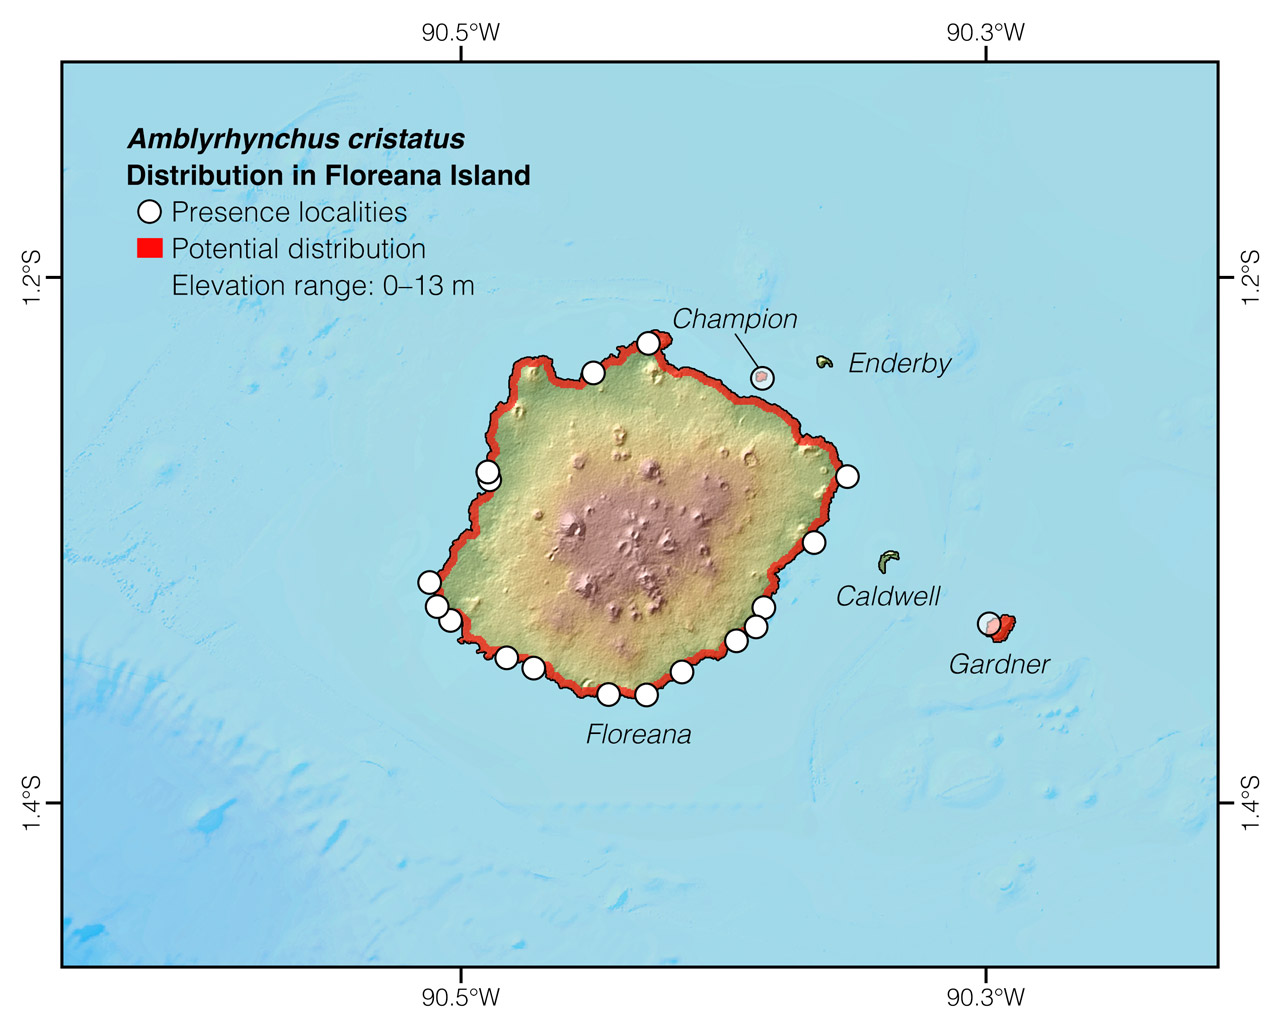 Distribution of Amblyrhynchus cristatus in and around Floreana Island